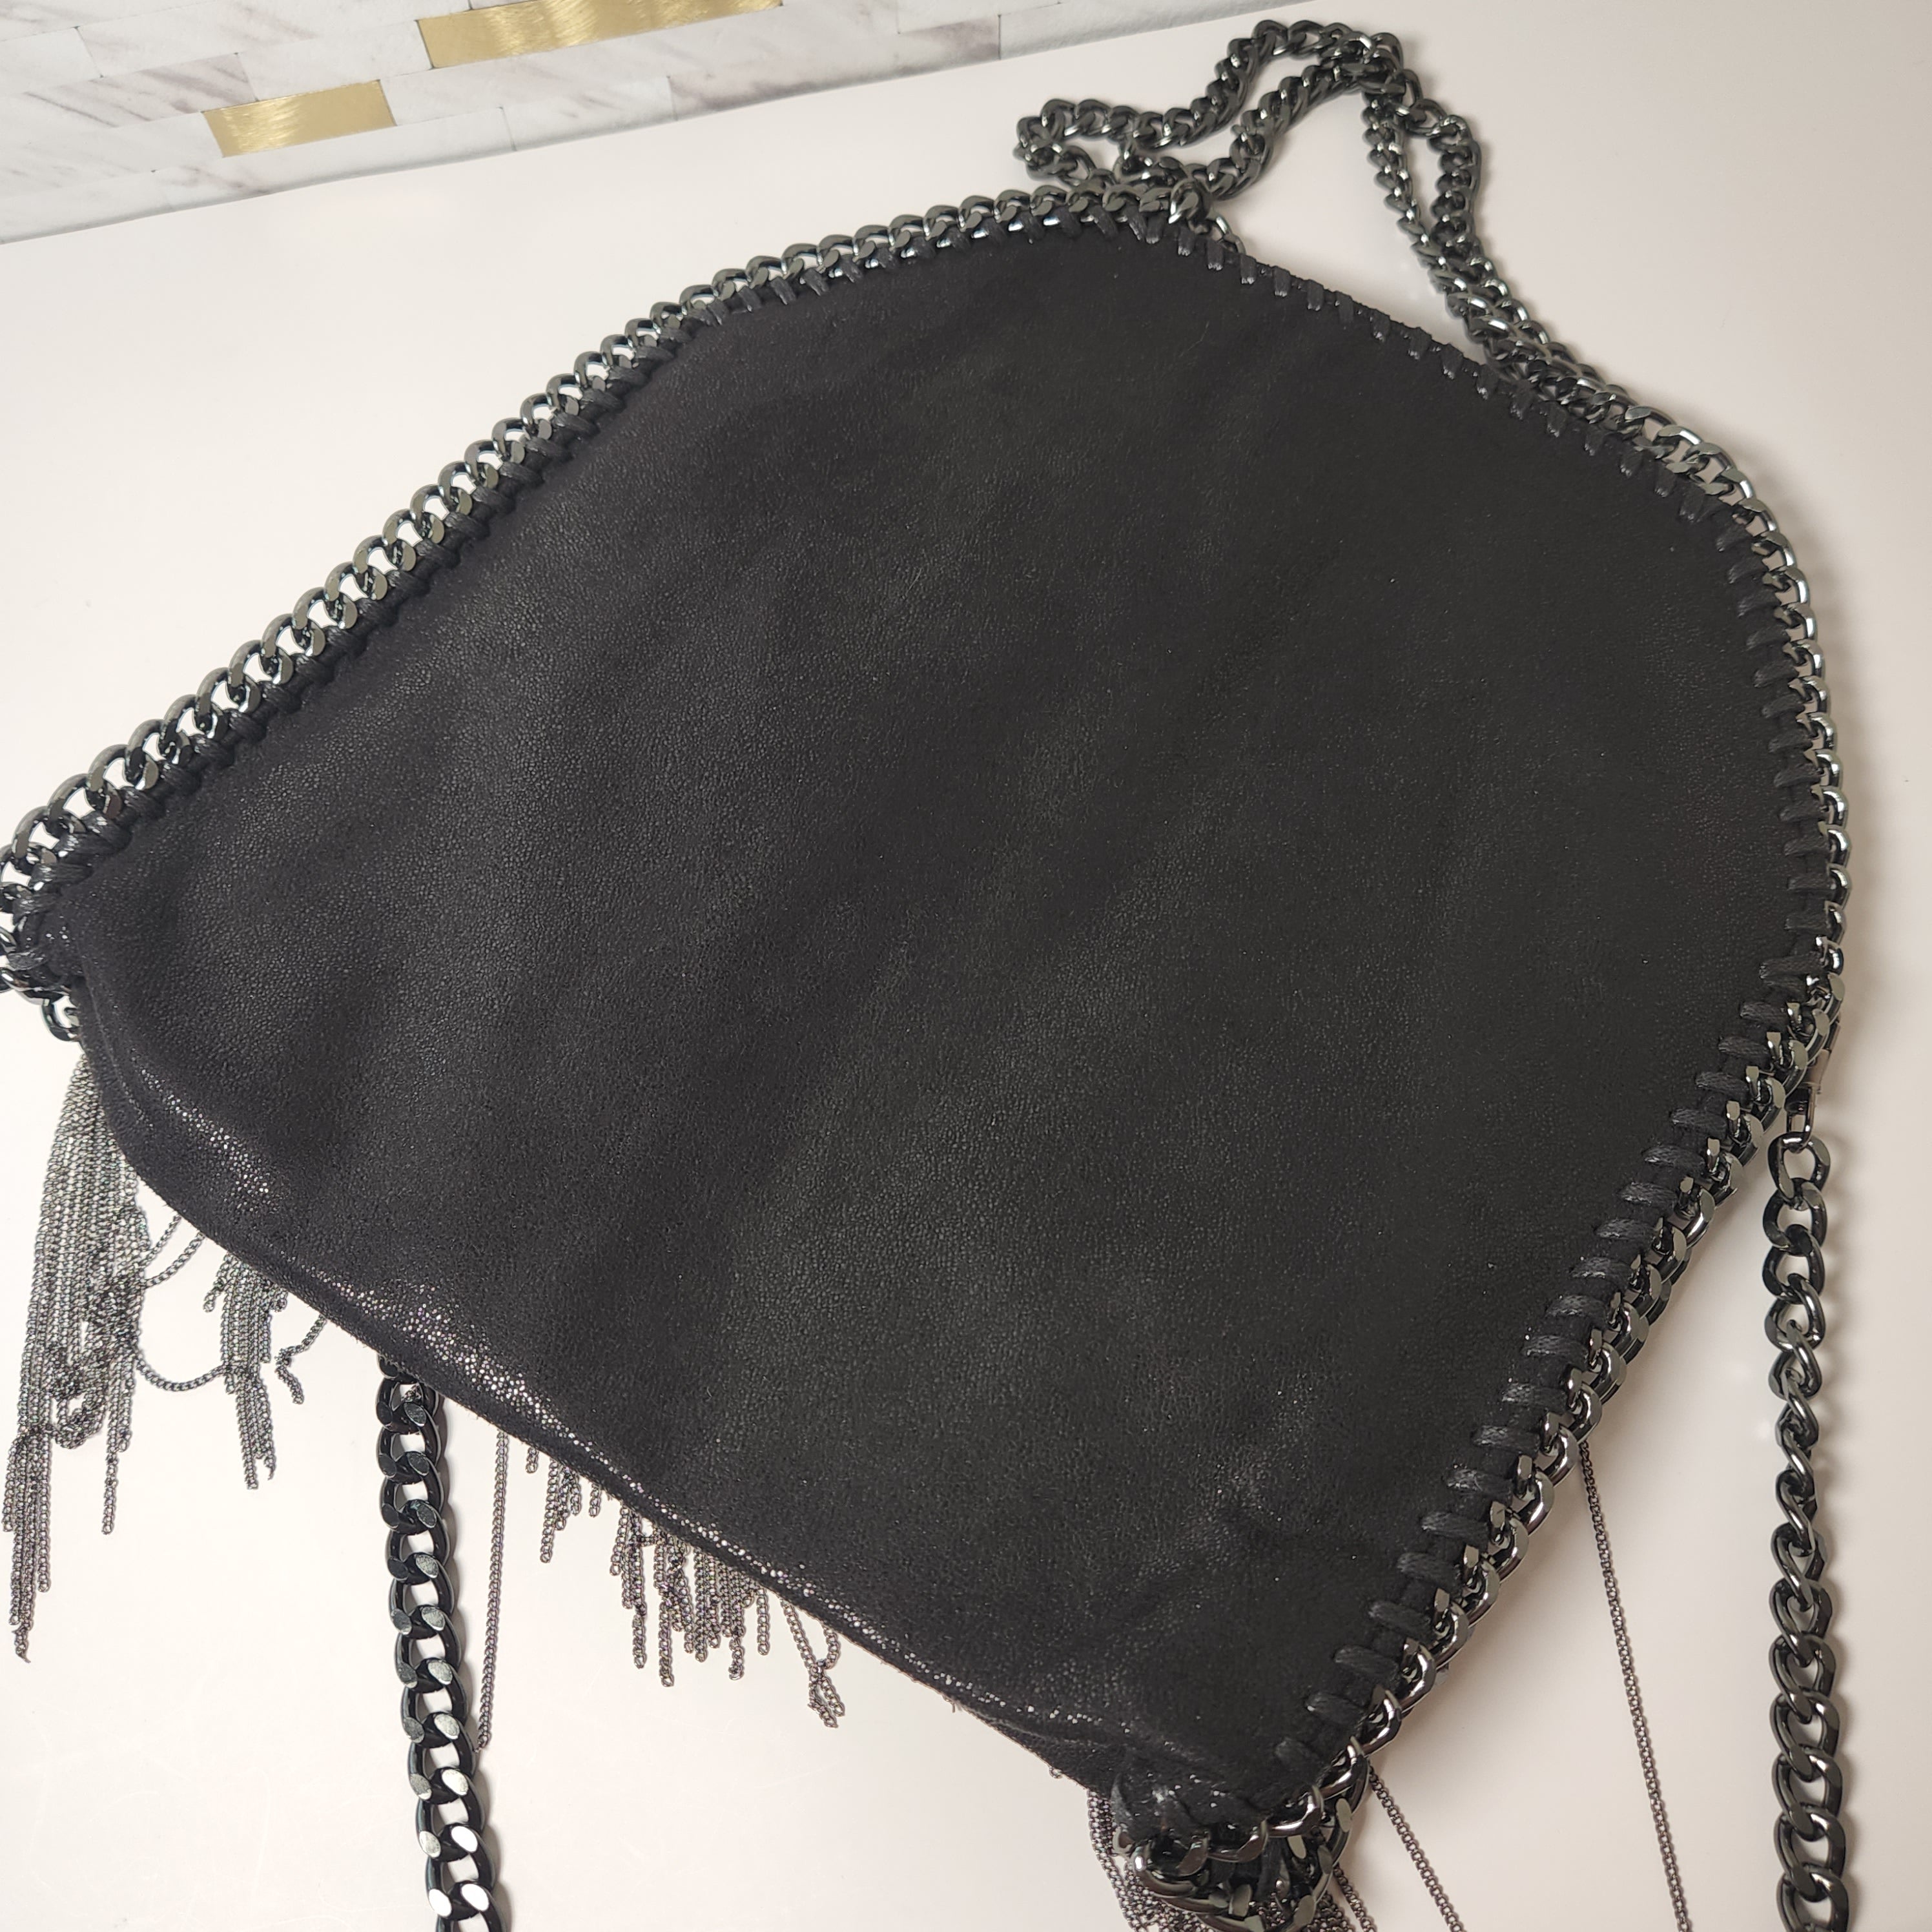 HAKSIM Women Black Quilted Purse Lattice Clutch Small Crossbody Shoulder Bag  with Chain Strap Leather: Handbags: Amazon.com